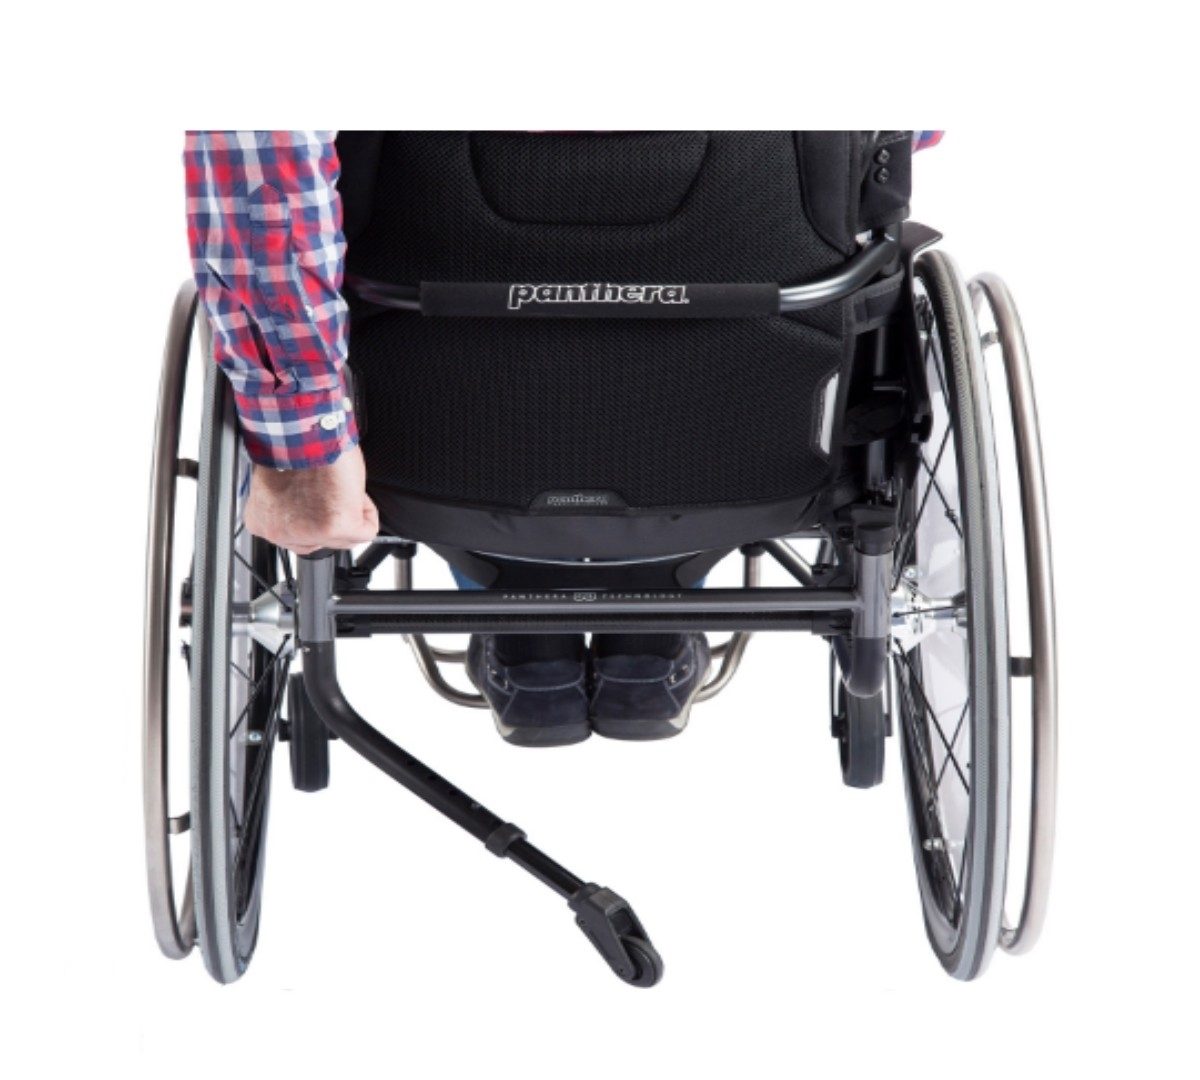 PANTHERA | S3 Aktif Tekerlekli Sandalye | Akülü Tekerlekli Sandalye | Tekerlekli Sandalye